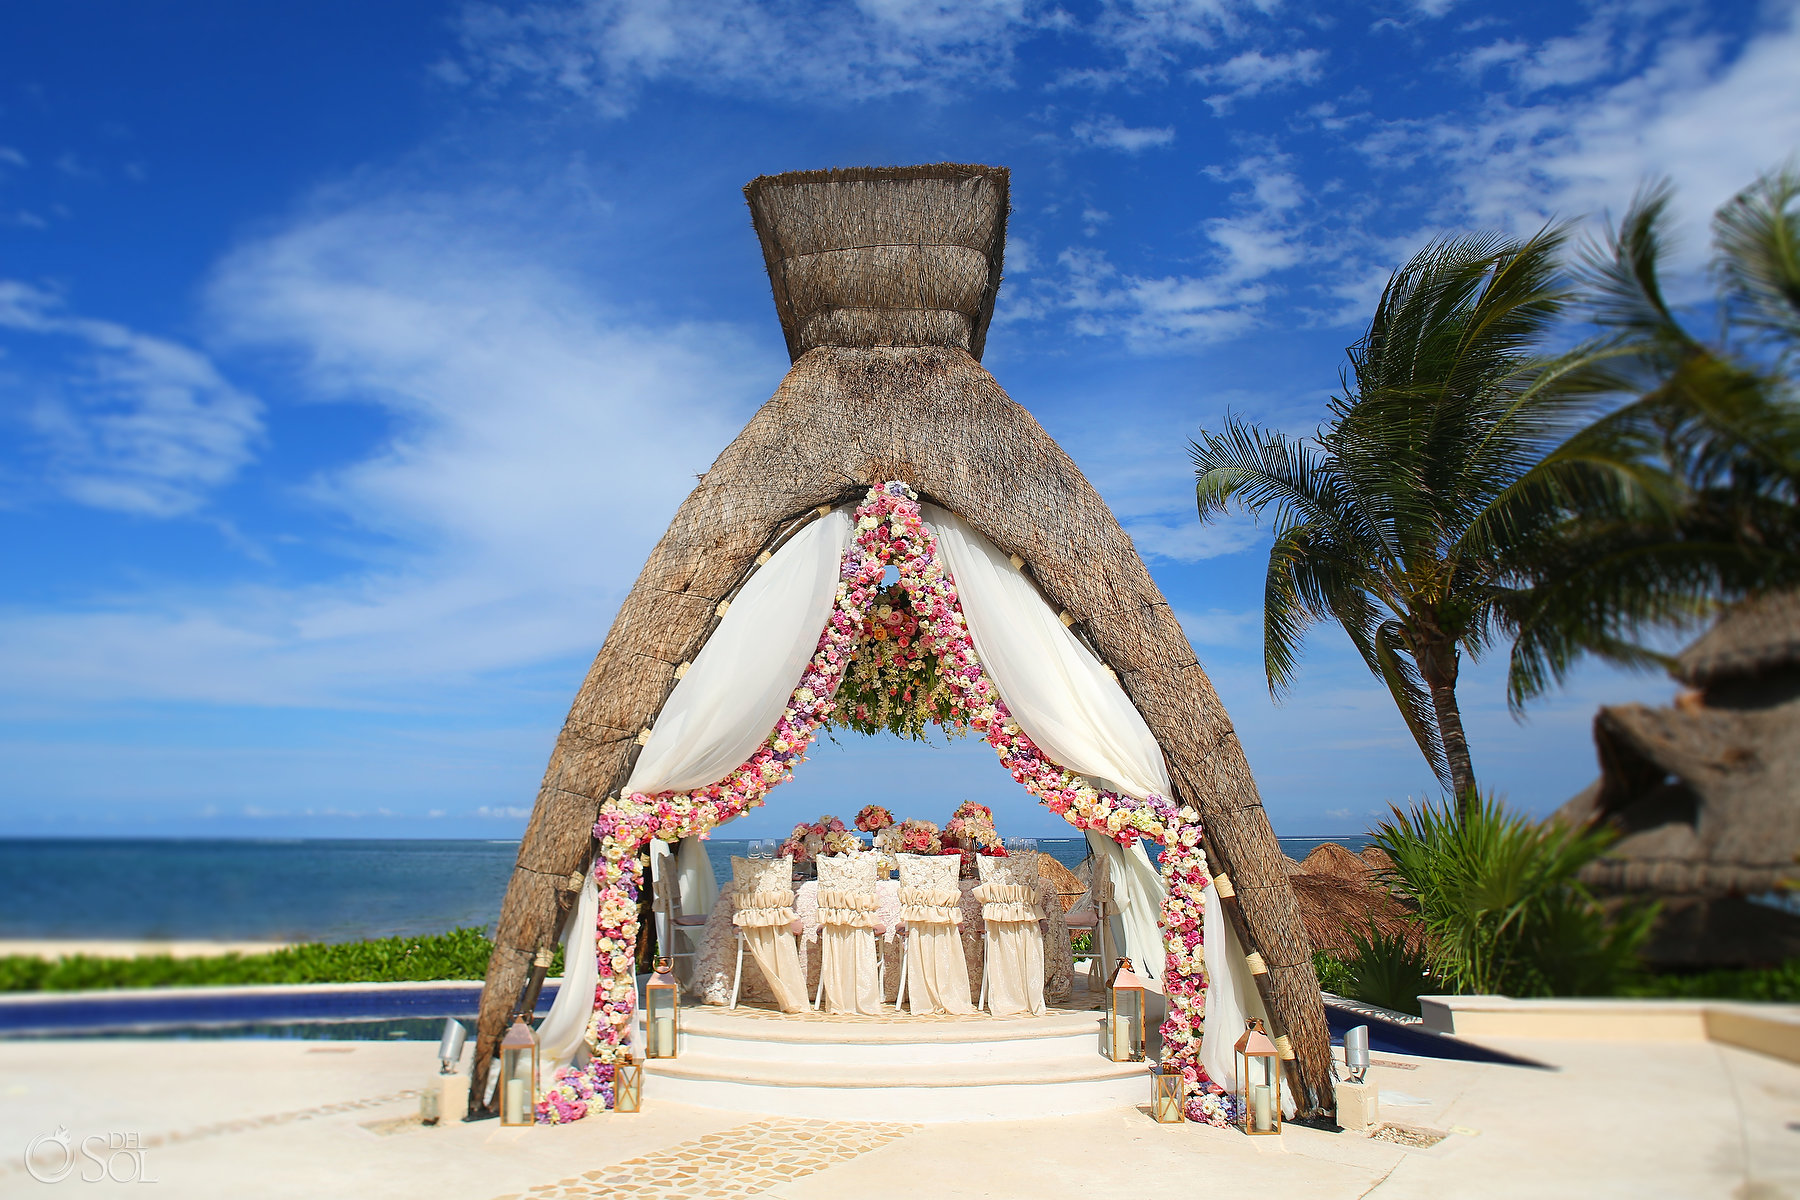 Destination Wedding Travel Agency Dreams Riviera Cancun photos by Del Sol Photography